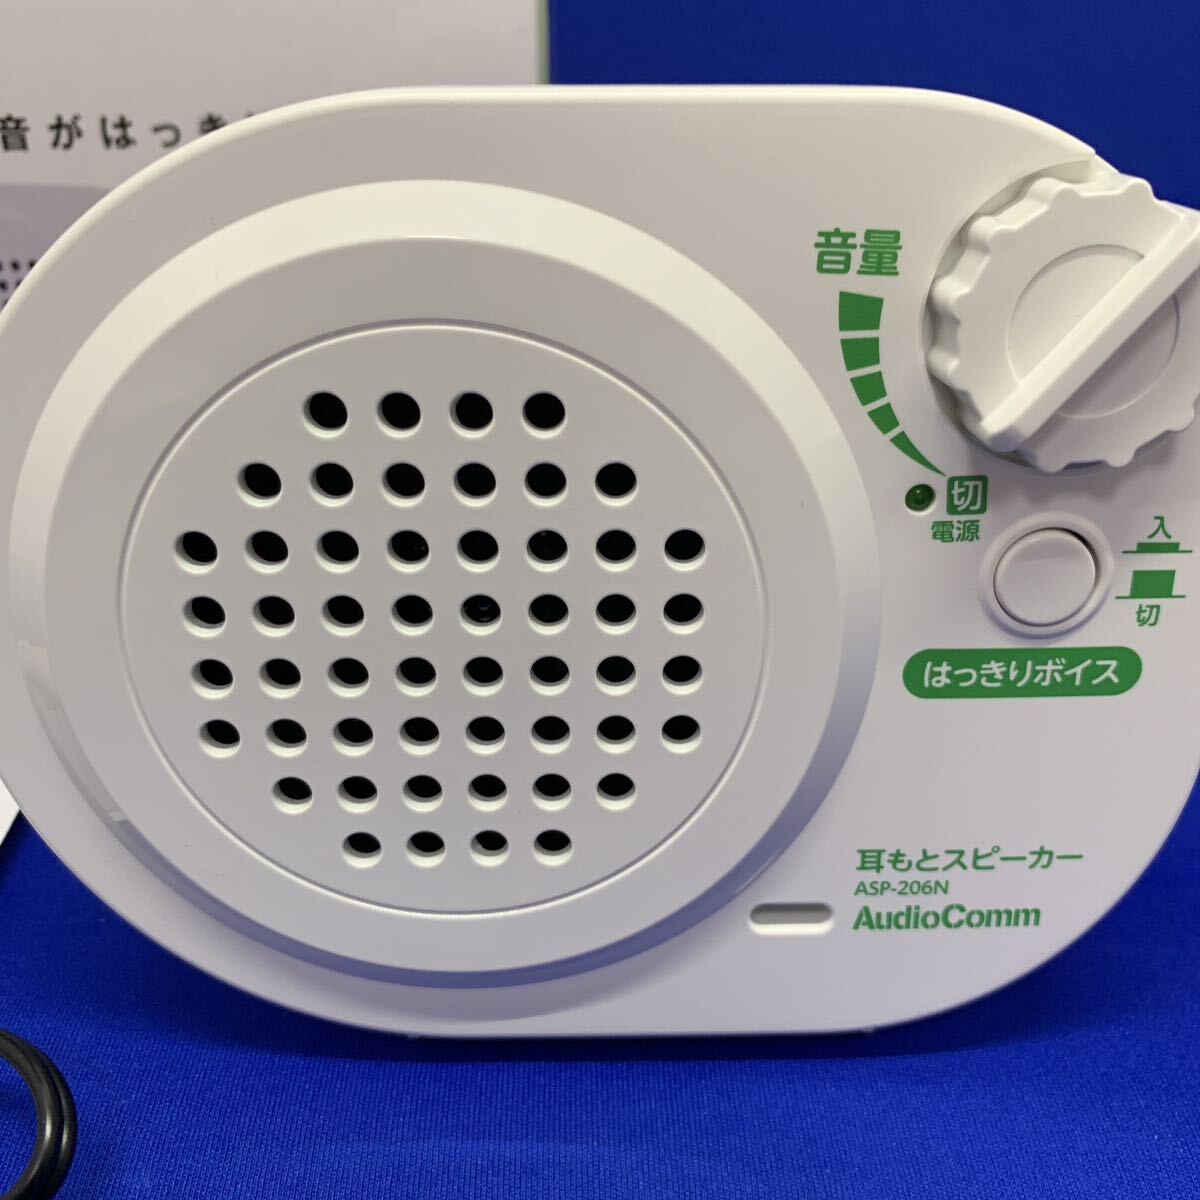 Y8911 オーム電機AudioComm 耳もとスピーカー テレビ用 耳元スピーカー 5mロングコード ポータブル ホワイト ASP-206N 03-2067 OHMの画像2